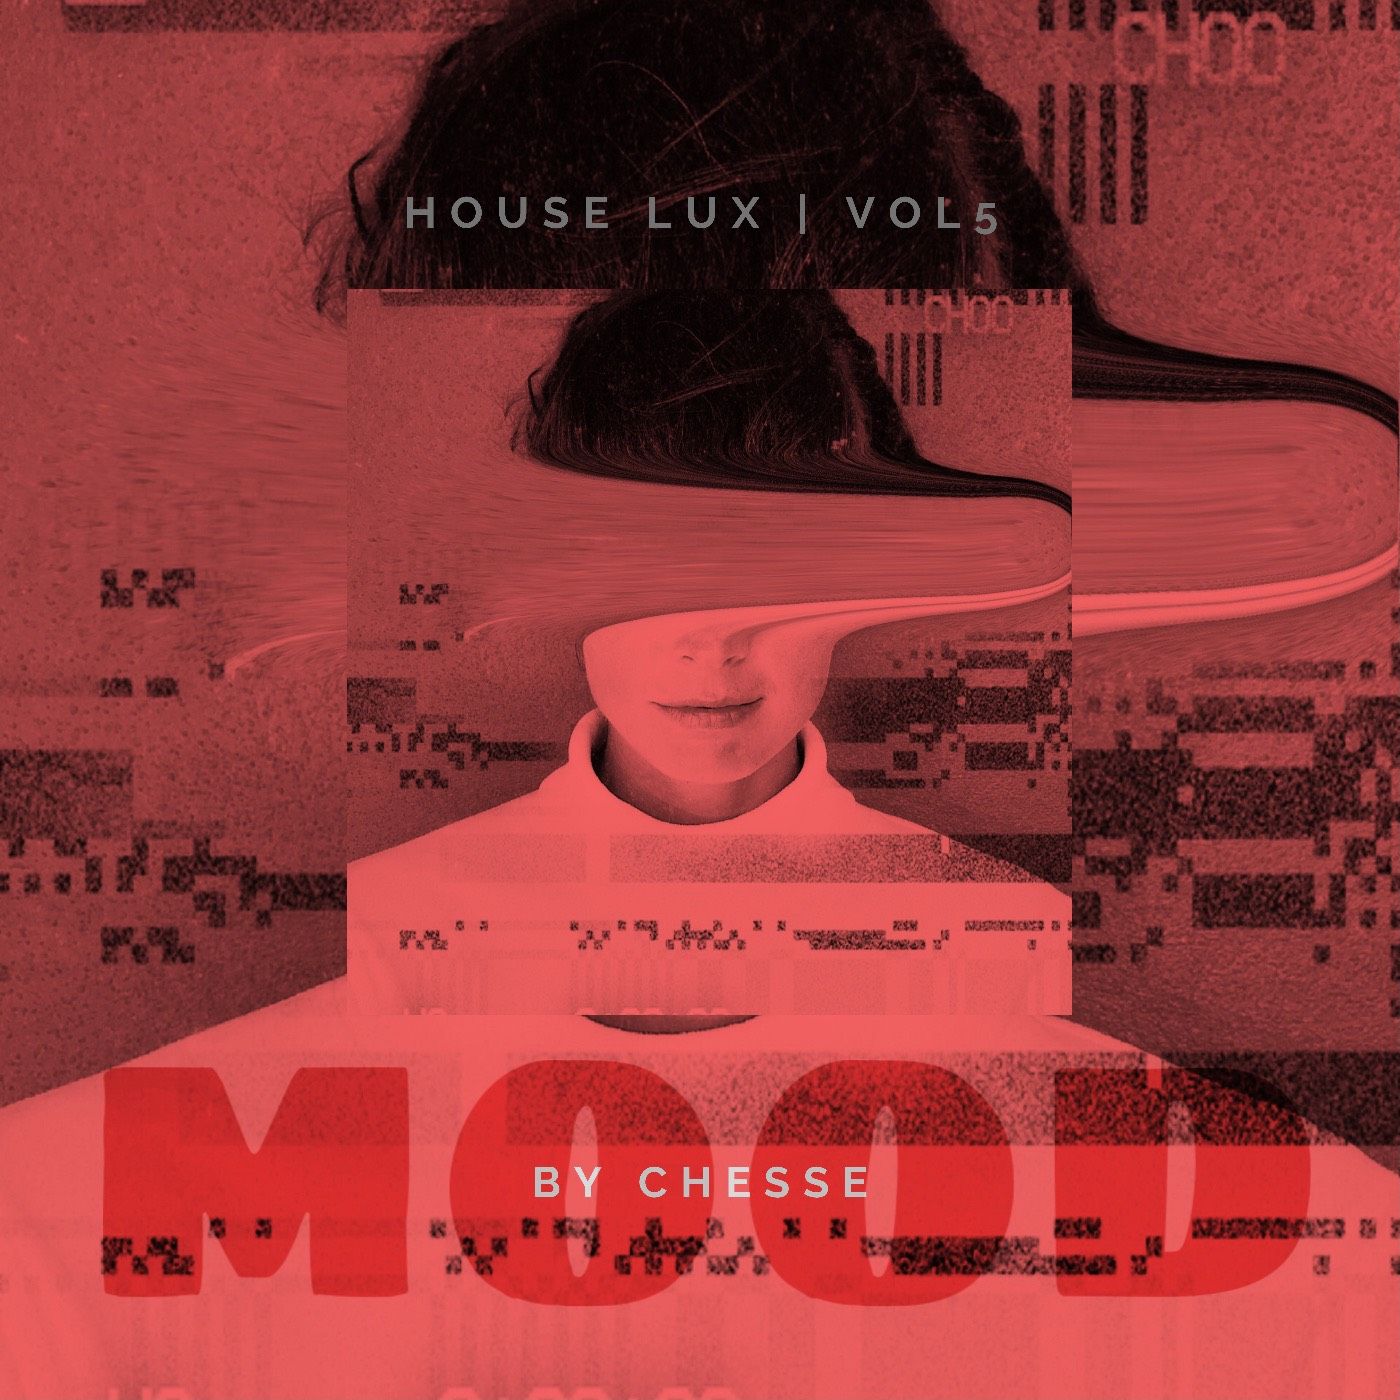 डाउनलोड करा MOOD - By Chesse - House lux #005